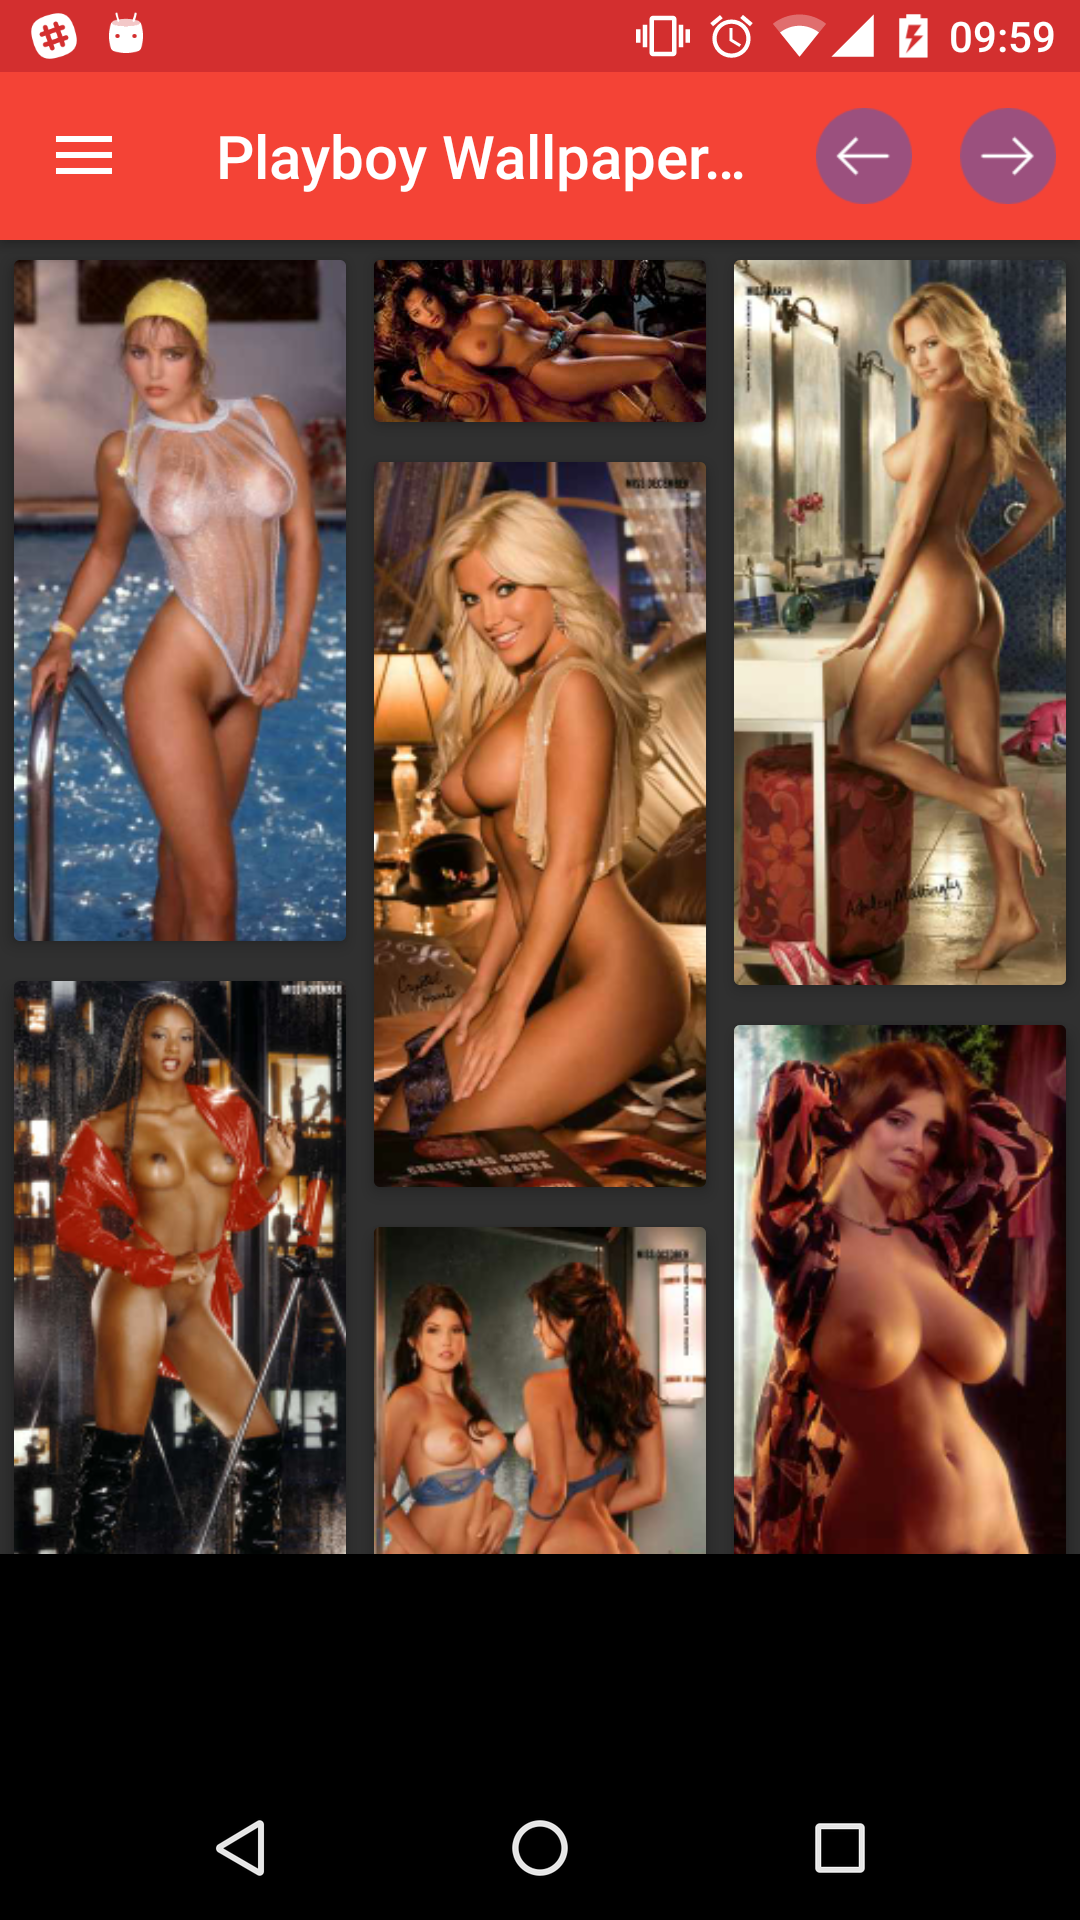 Playboy wallpapers pics,sexy,photos,photo,app,esperanza,wallpapers,tits,futanari,personalization,customization,backgrounds,hentai,download,pic,hentia,magazine,galleries,centerfolds,gomez,anime,erotic,playboy,nhentai,perfectshemales,daily